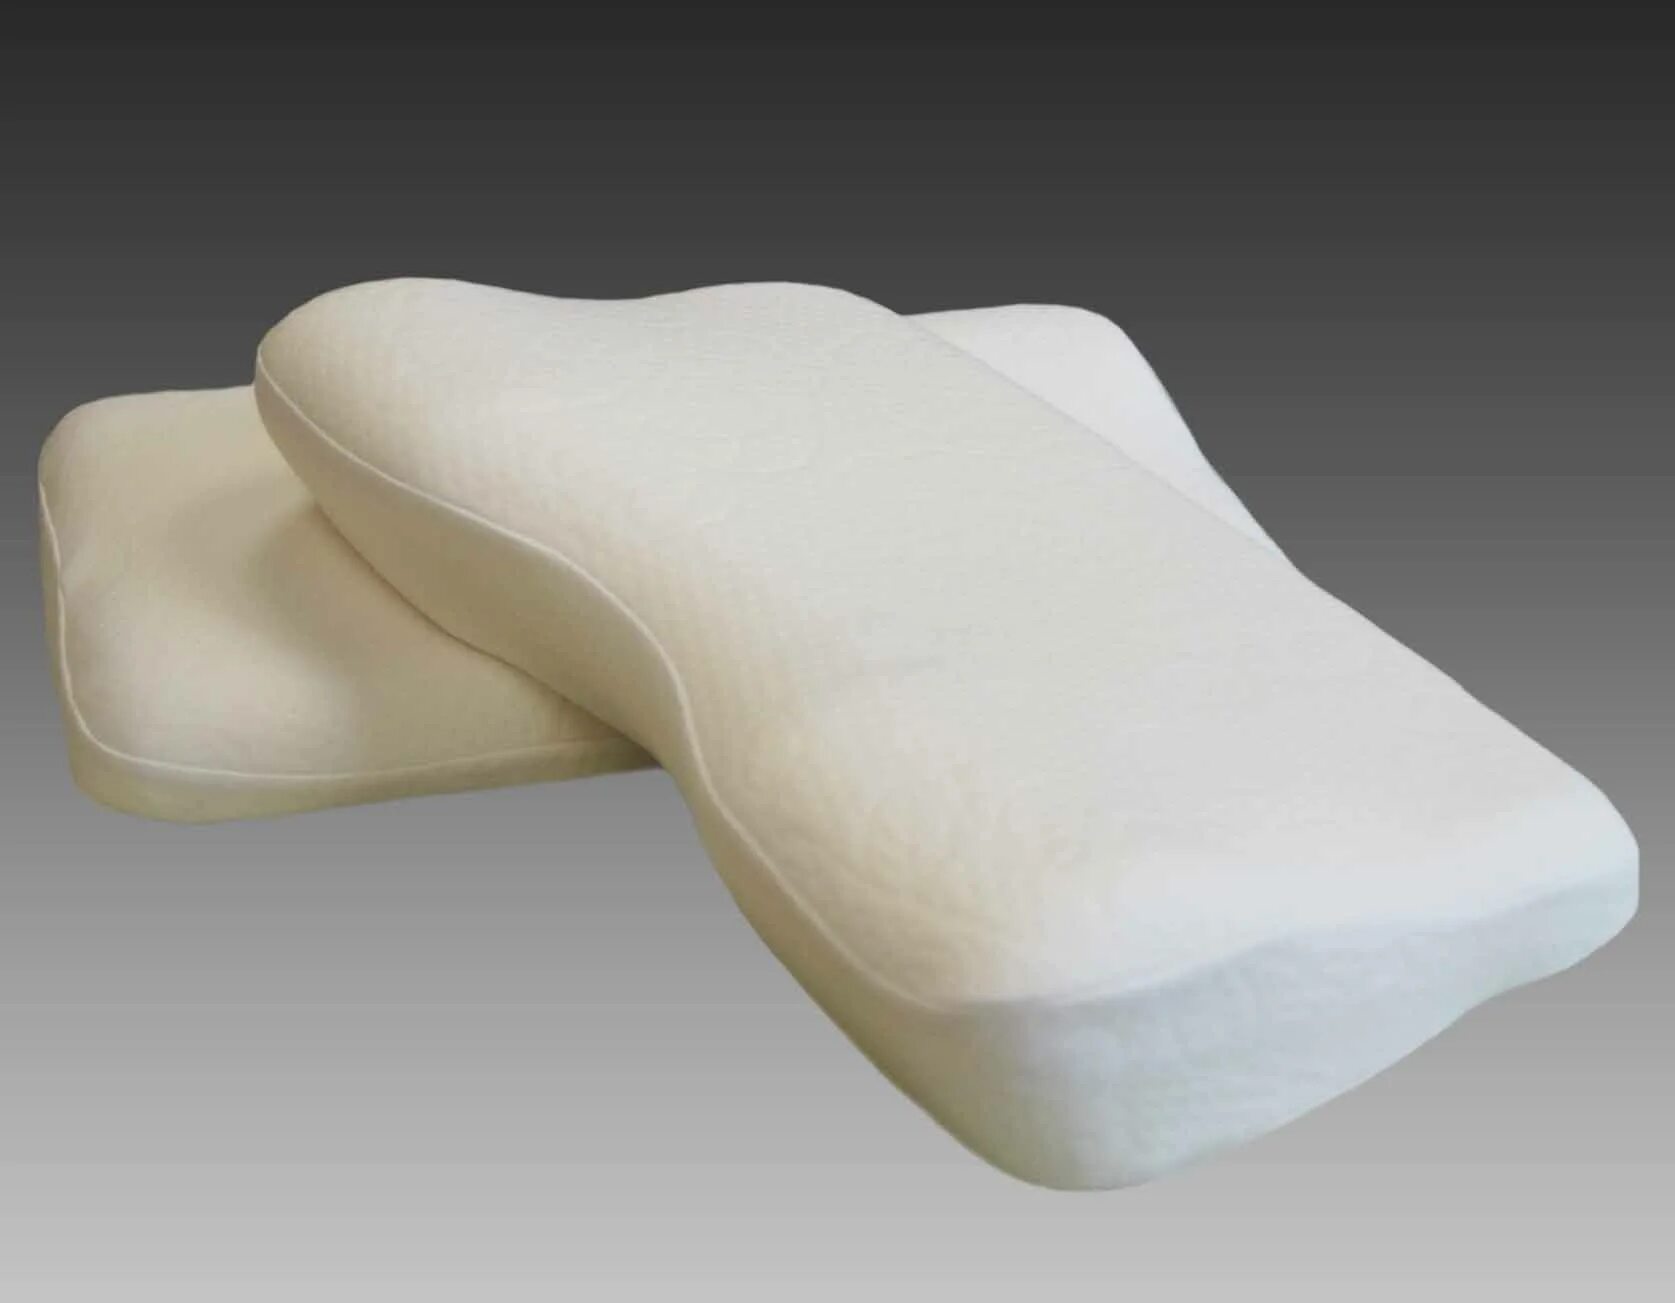 Ортопедическая подушка. Подушка анатомическая. Анатомические ортопедические подушки. Наволочка для ортопедической подушки. Купить ортопедическую подушку для сна на озон